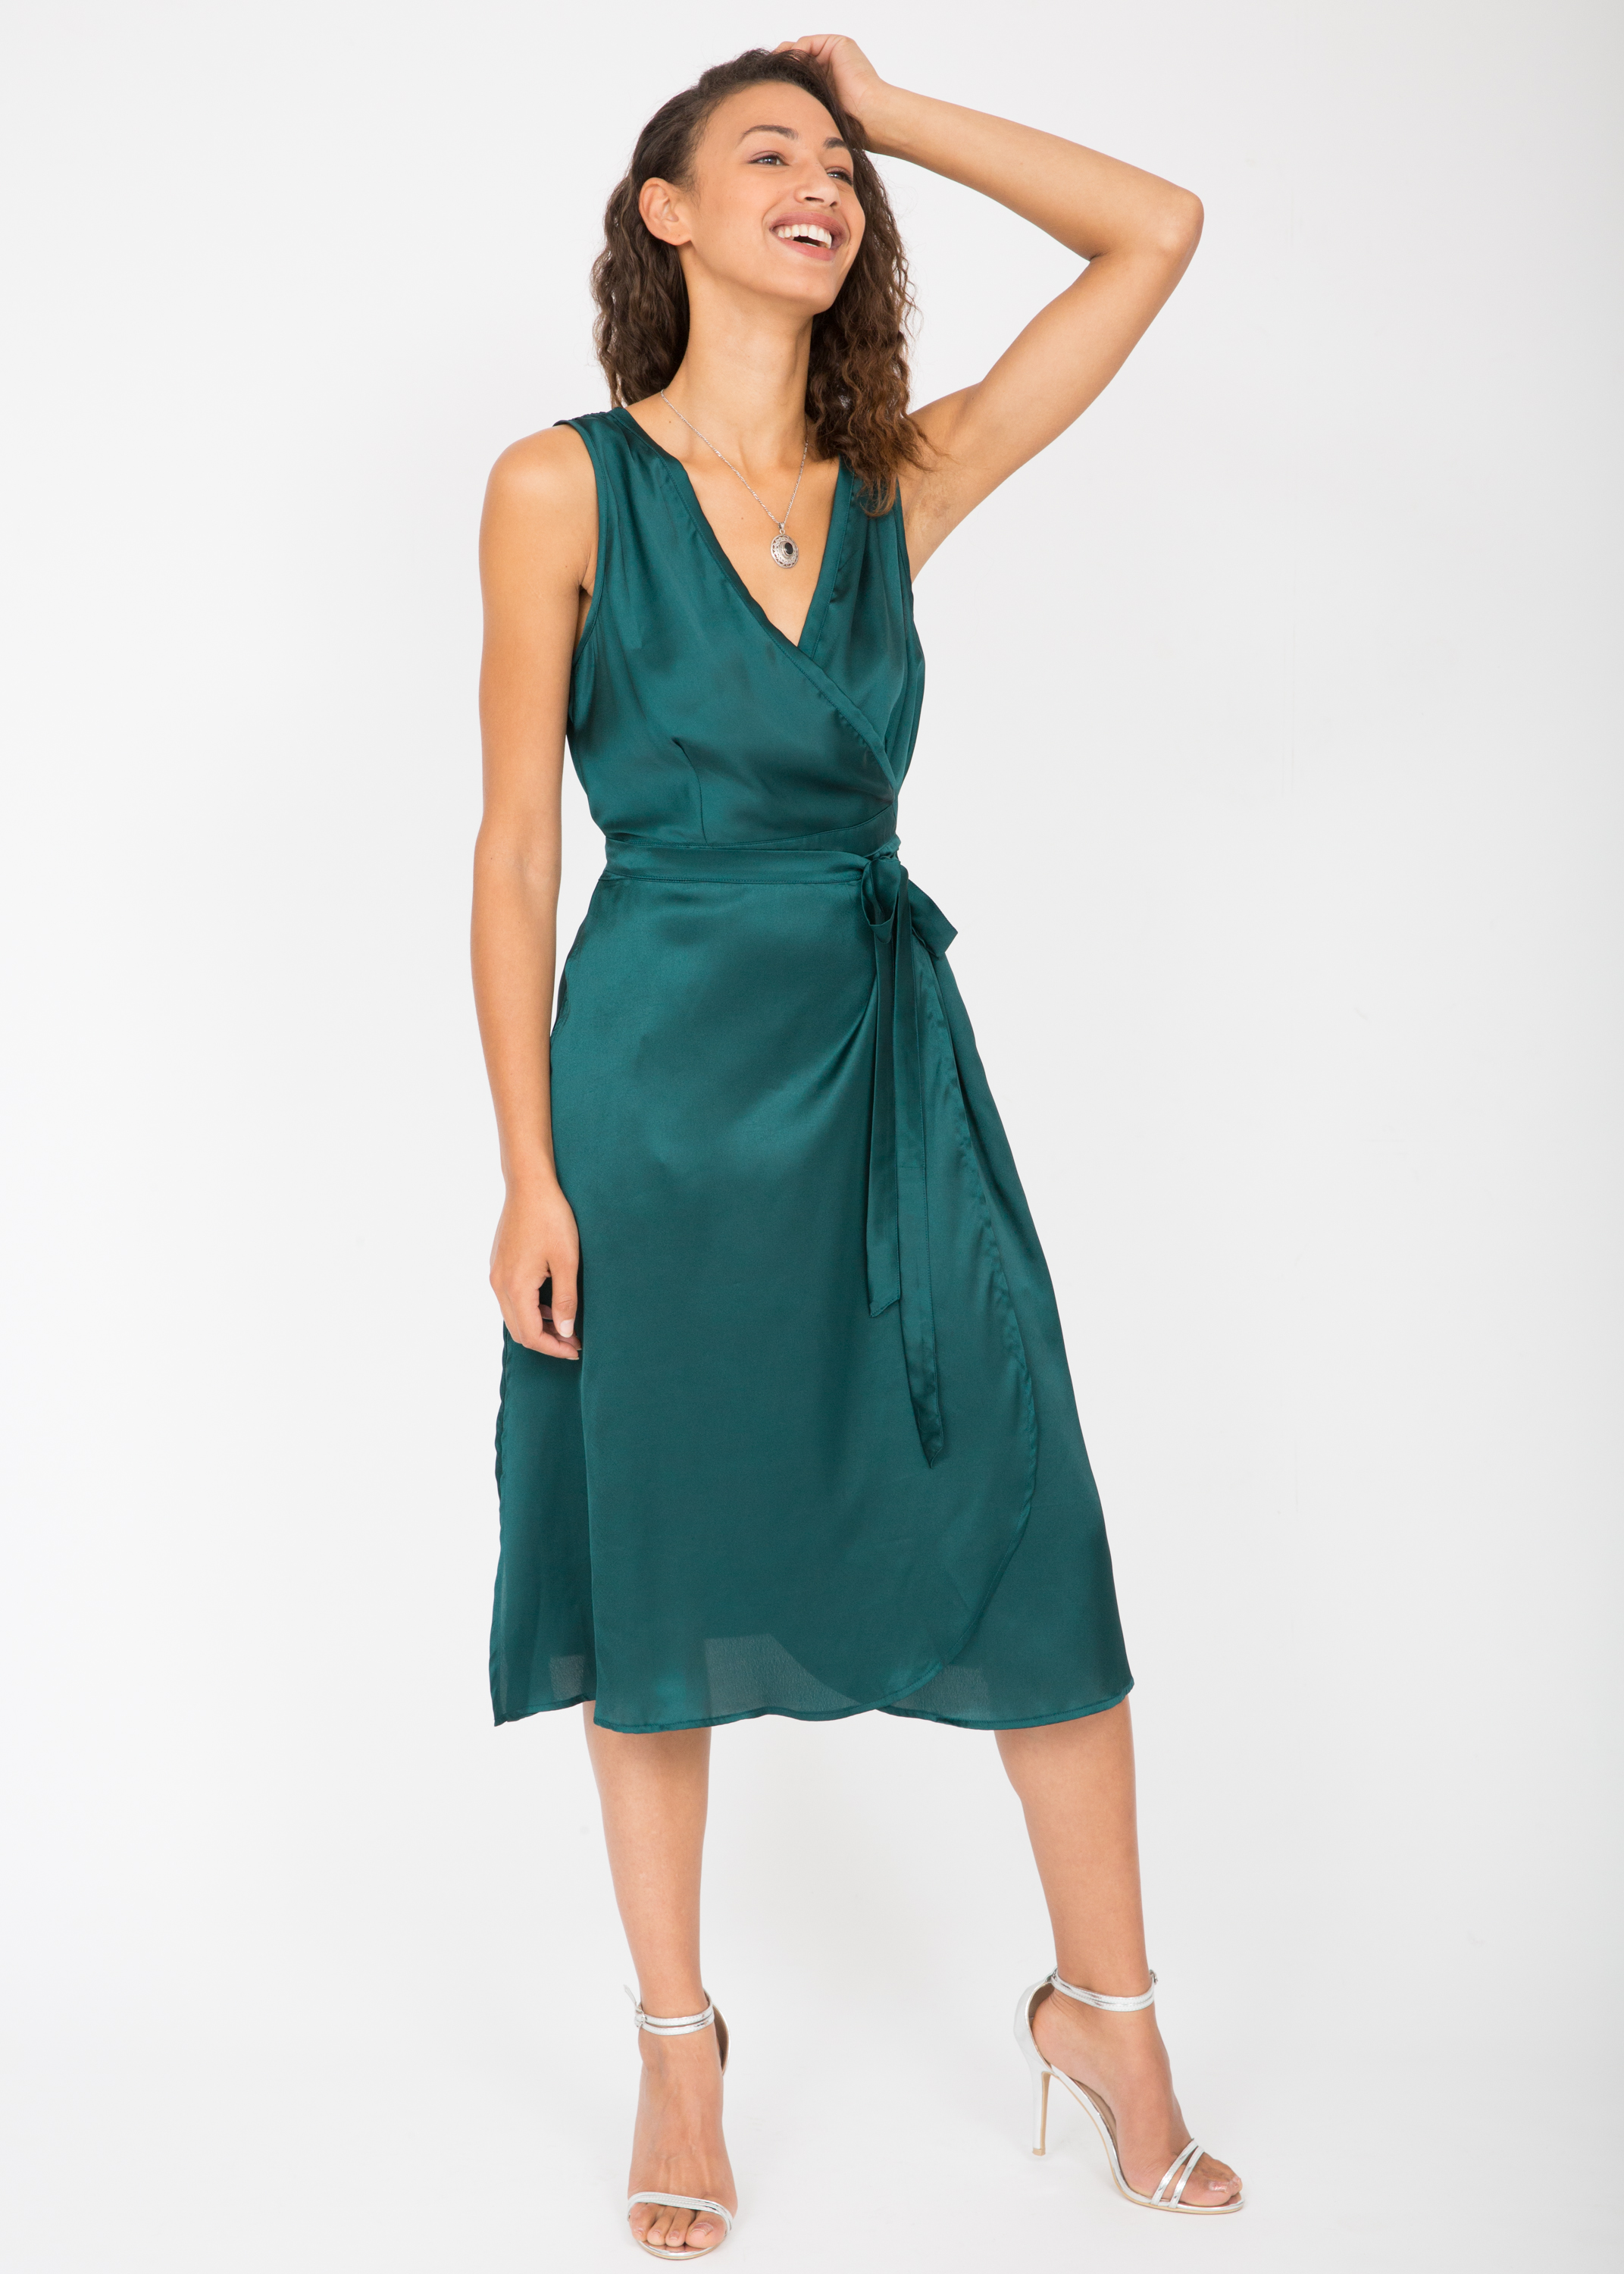 emerald satin wrap dress